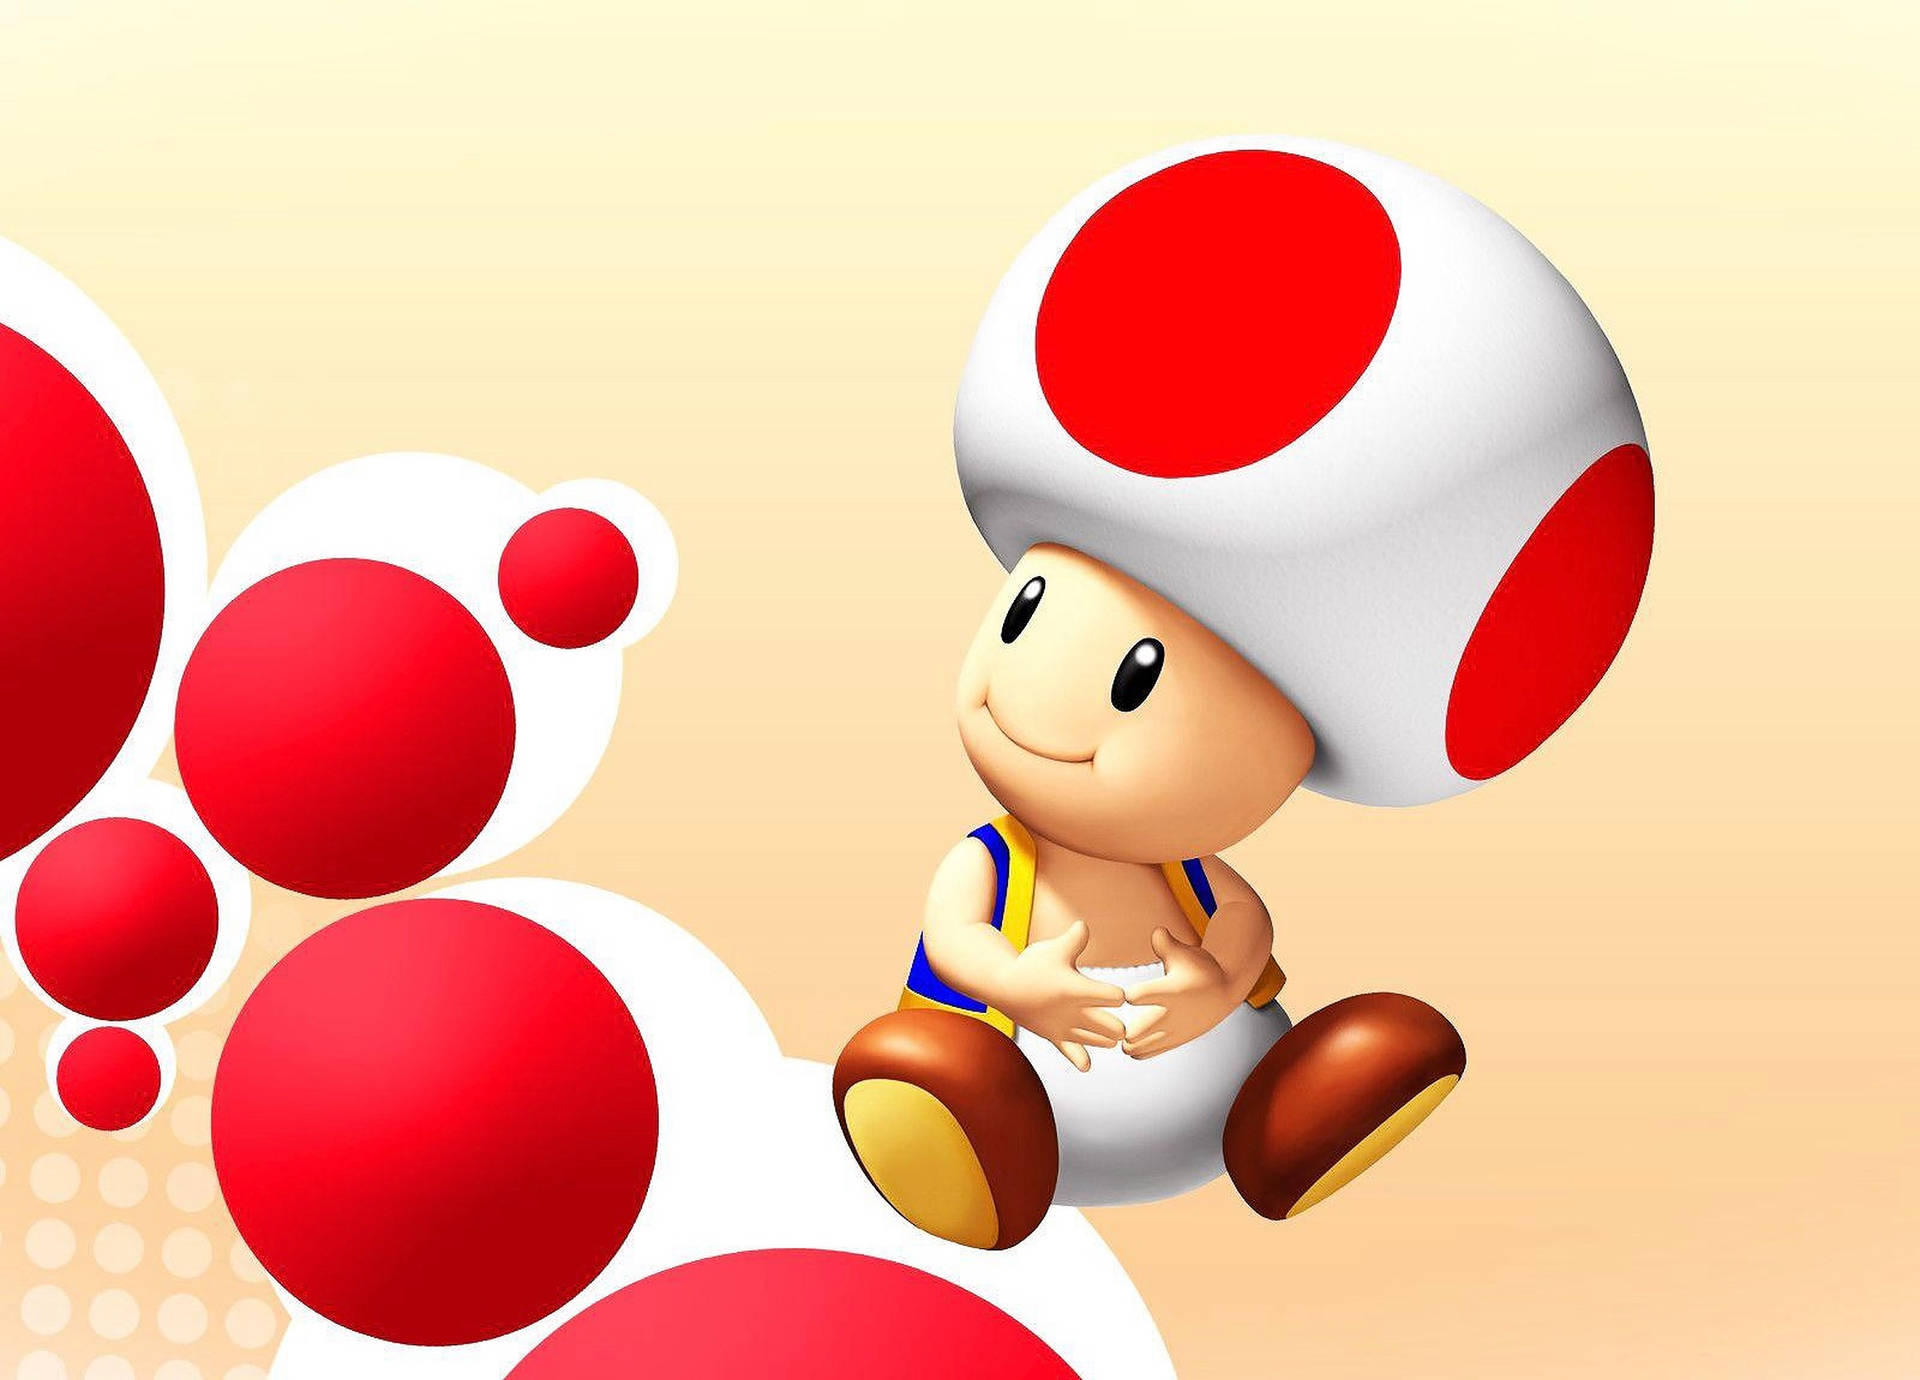 Cutesy Toad Nintendo Character